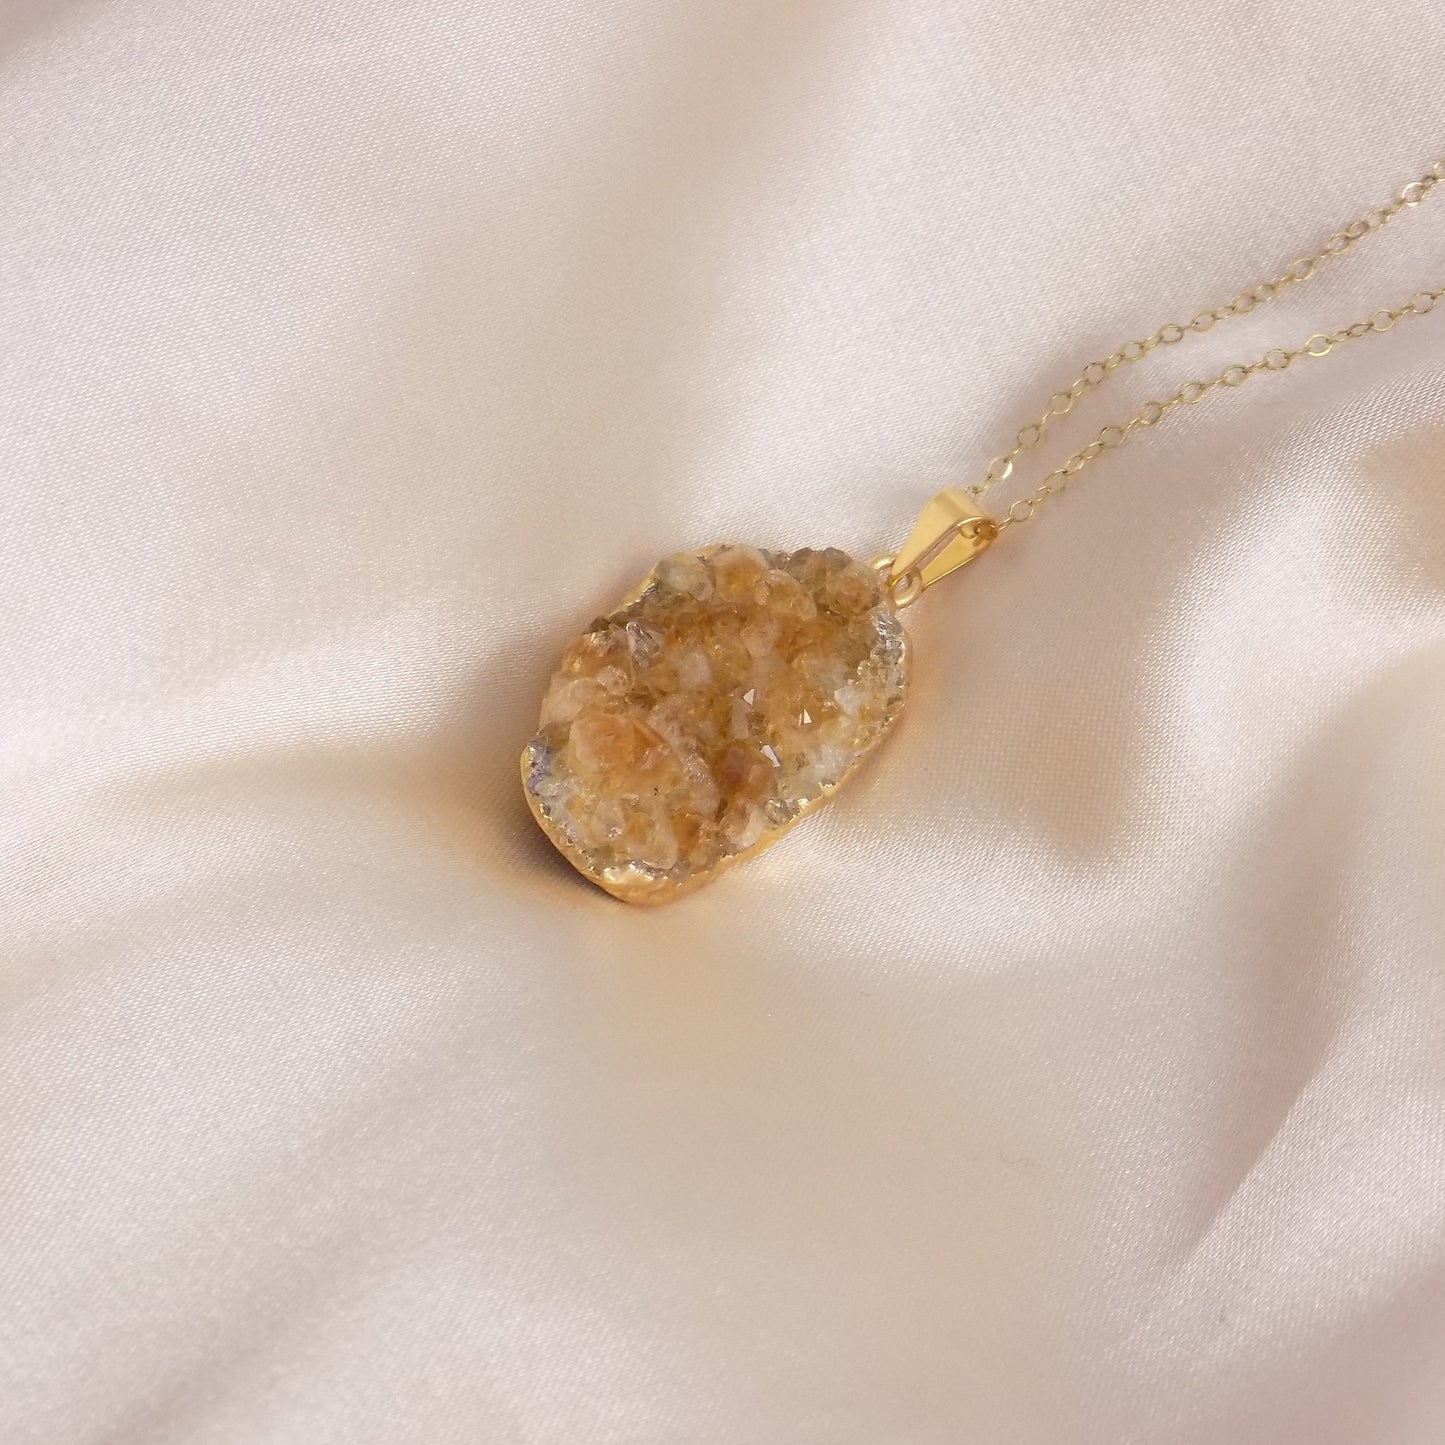 November Birthstone Jewelry - Raw Citrine Necklace Gold - Citrine Crystal Pendant - M7-146